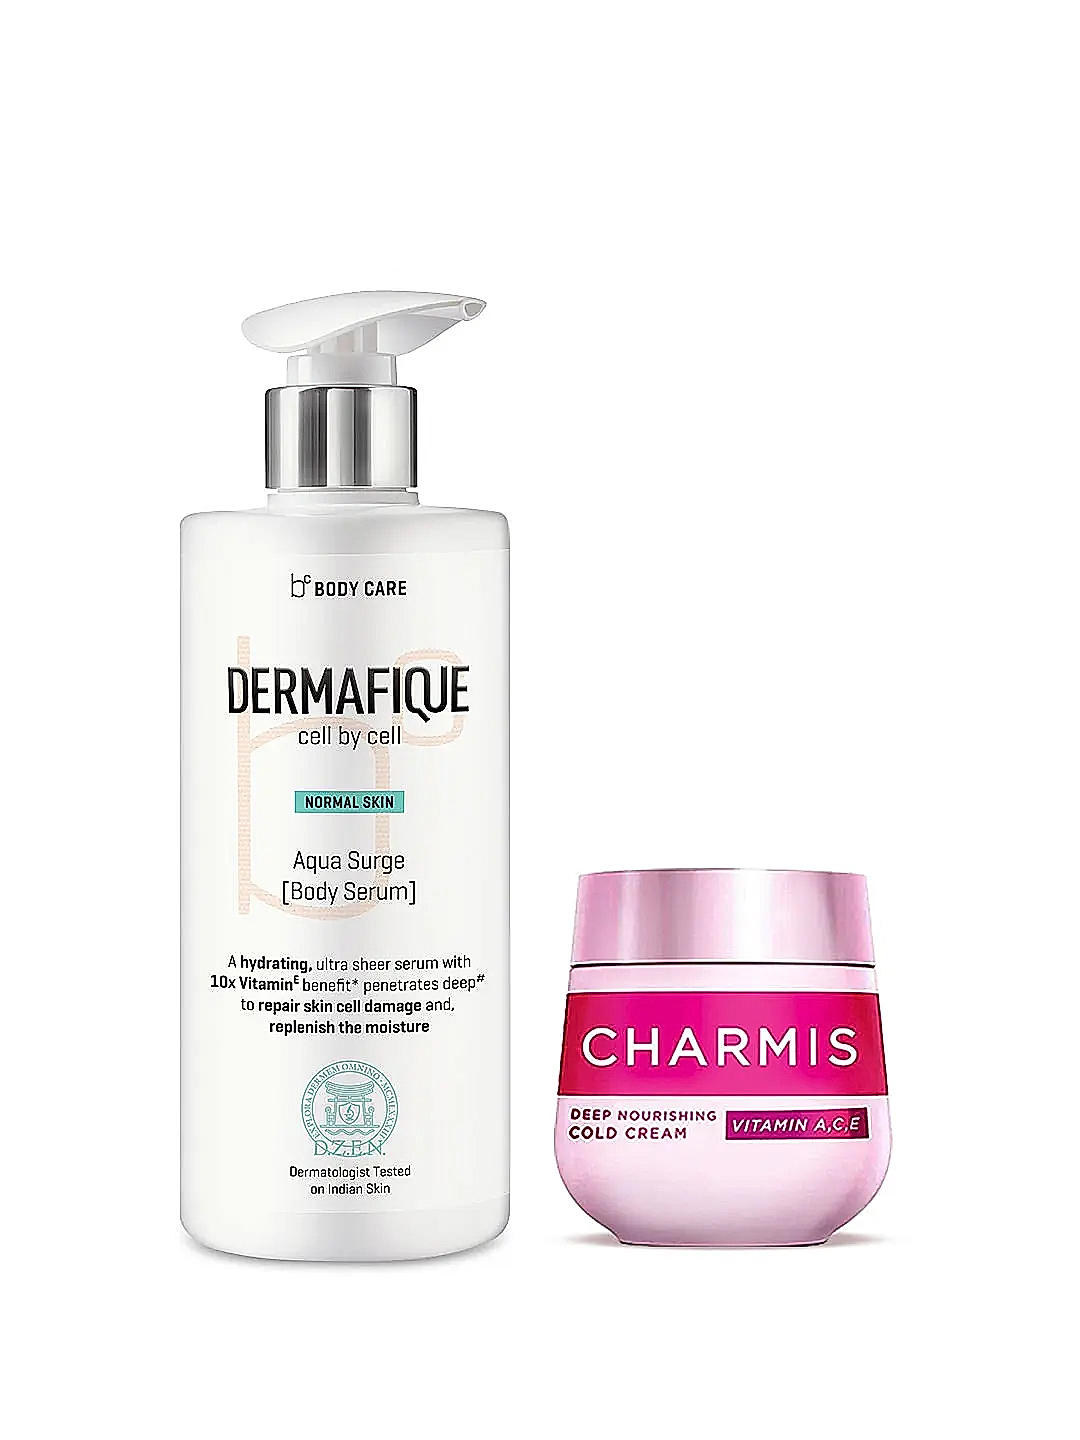 Dermafique Aqua Surge [Body Serum] and Charmis Deep Nourishing Cold Cream  Combo pack